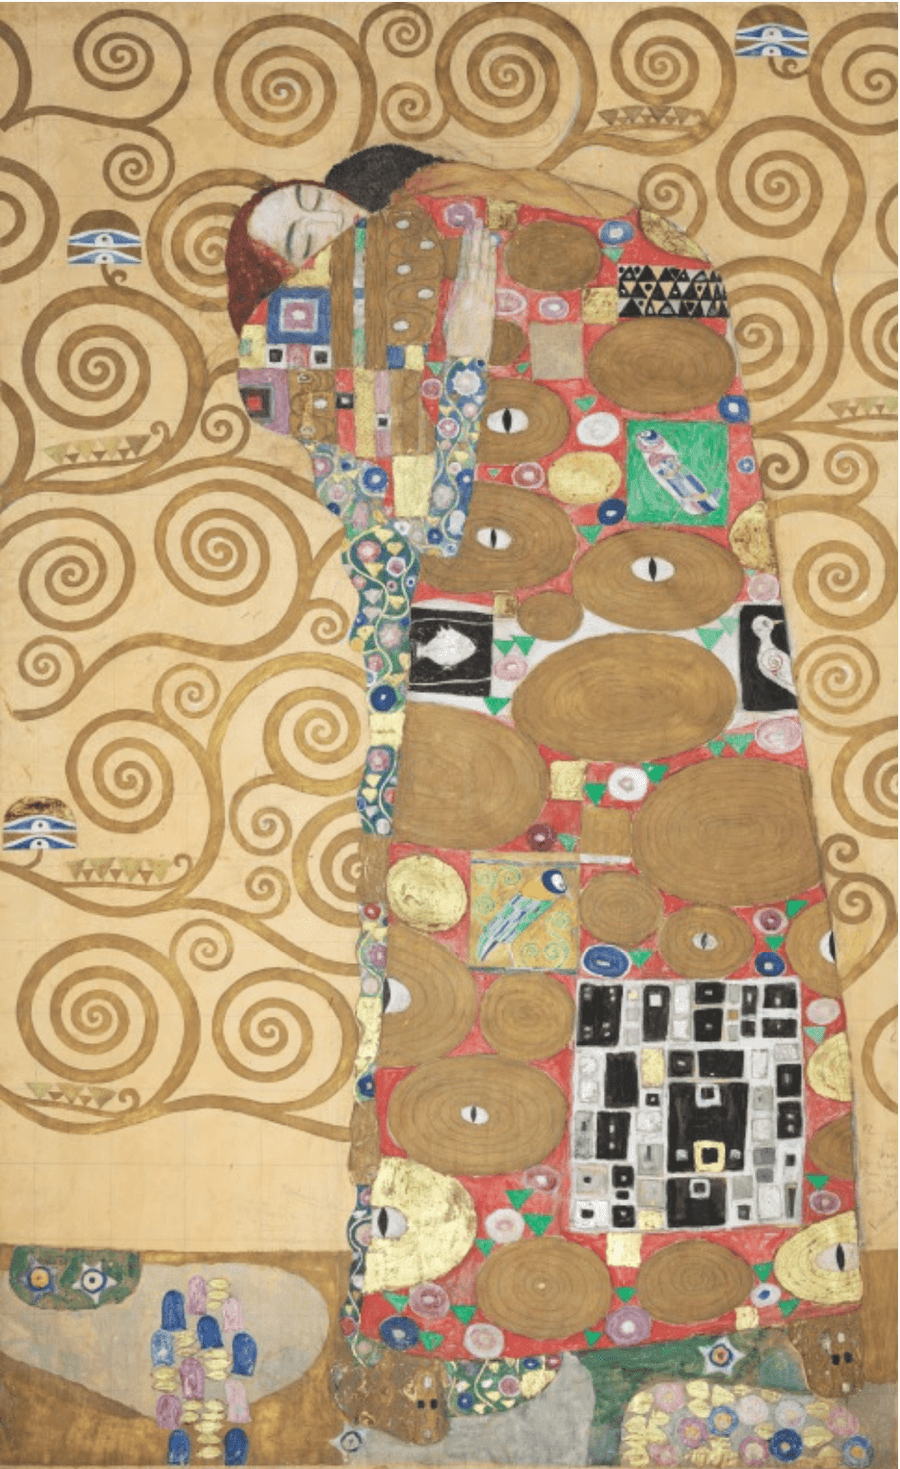 L'accomplissement - Gustav Klimt